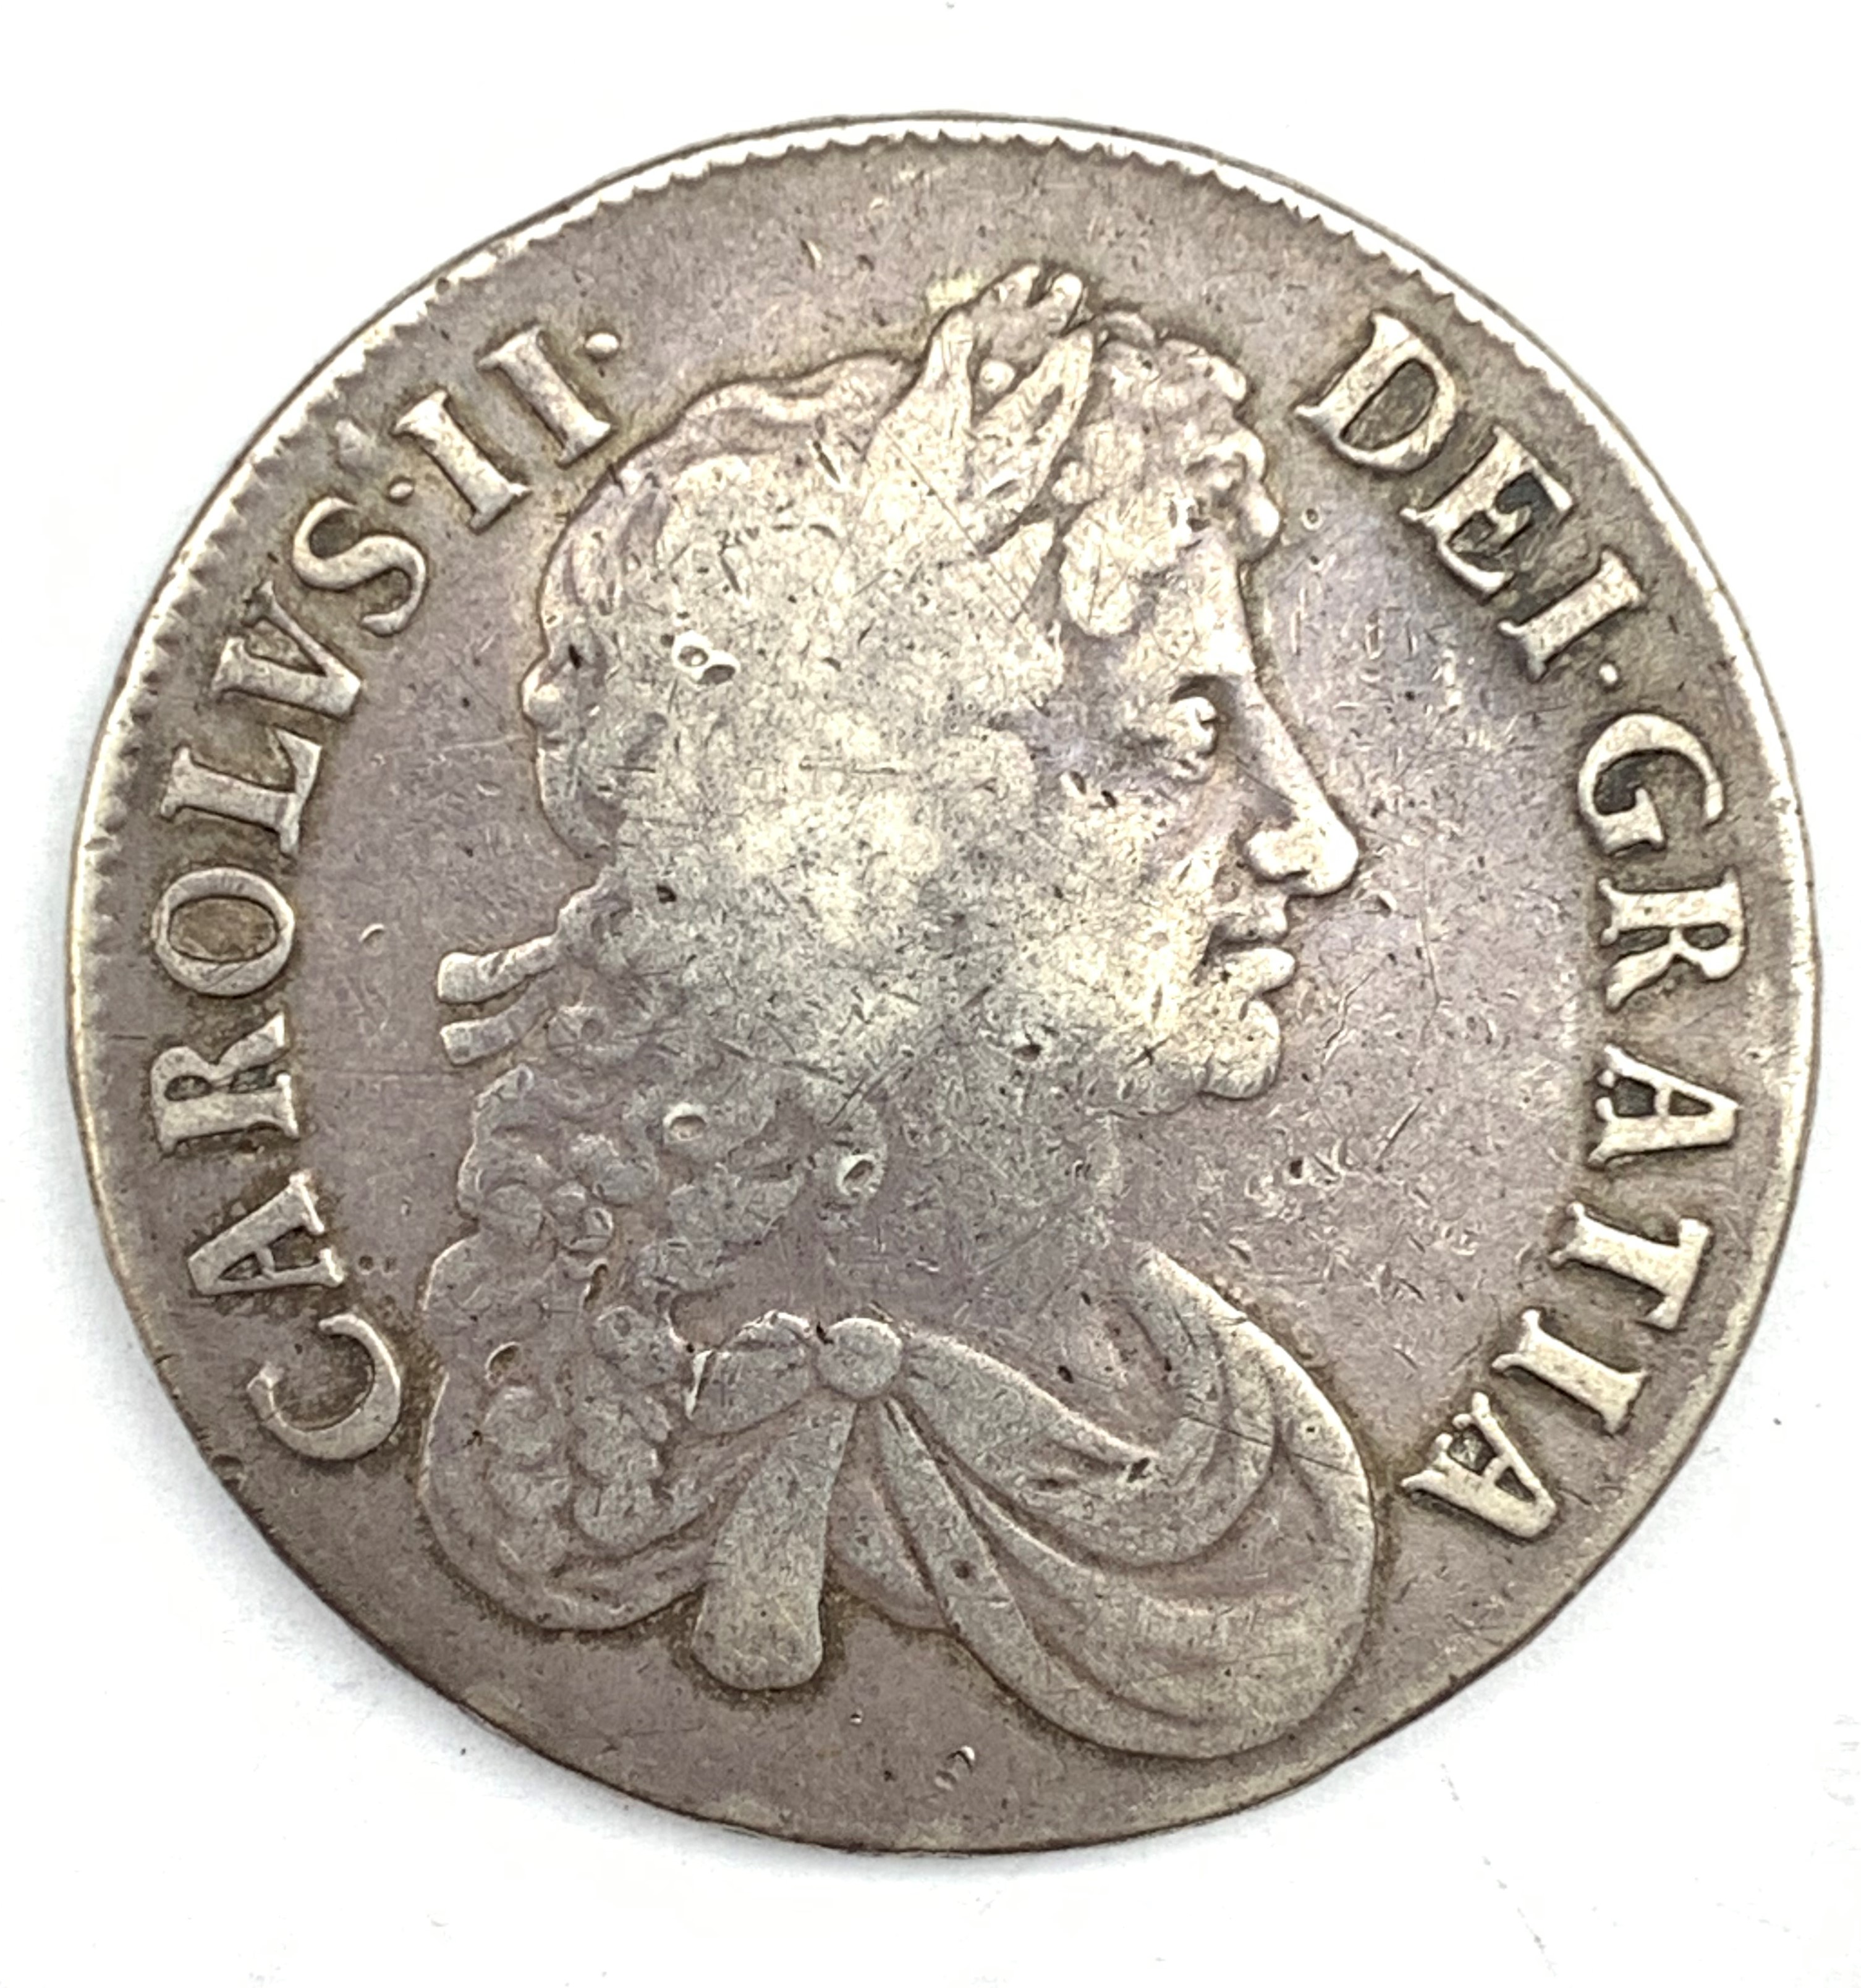 Charles II 1672 crown coin